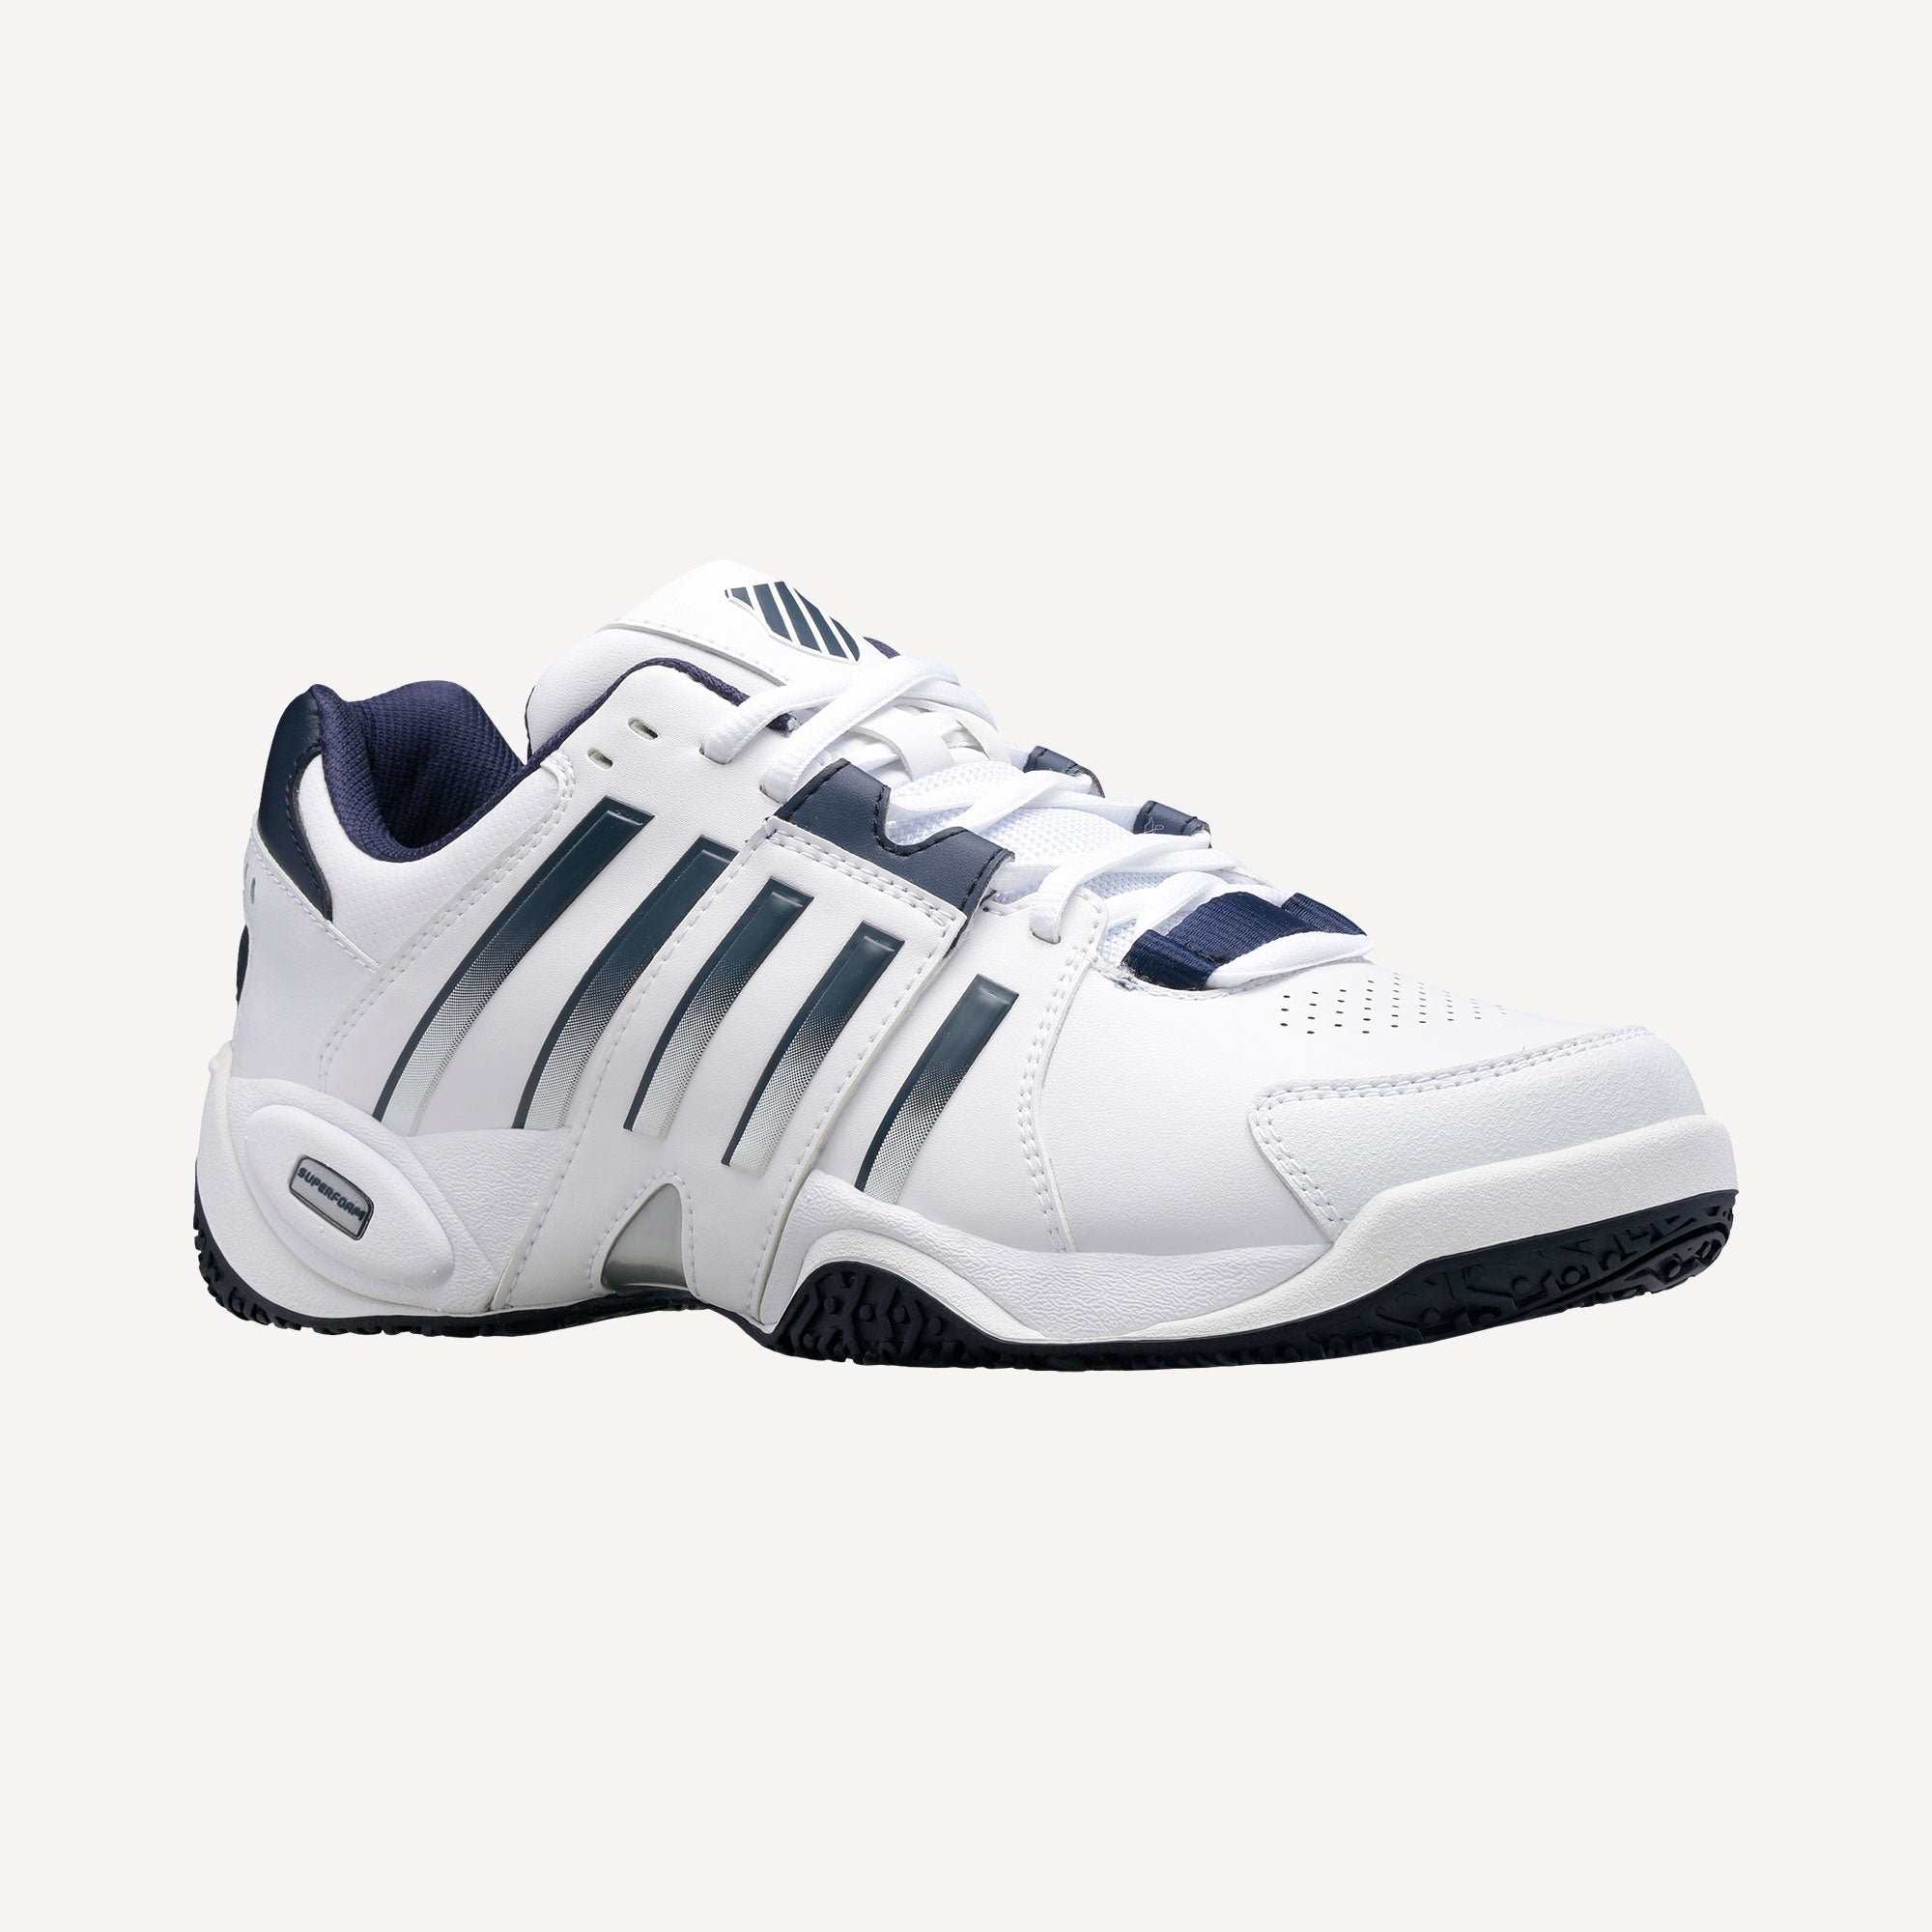 K-Swiss Accomplish IV Men's Omni Court Tennis Shoes White (4)